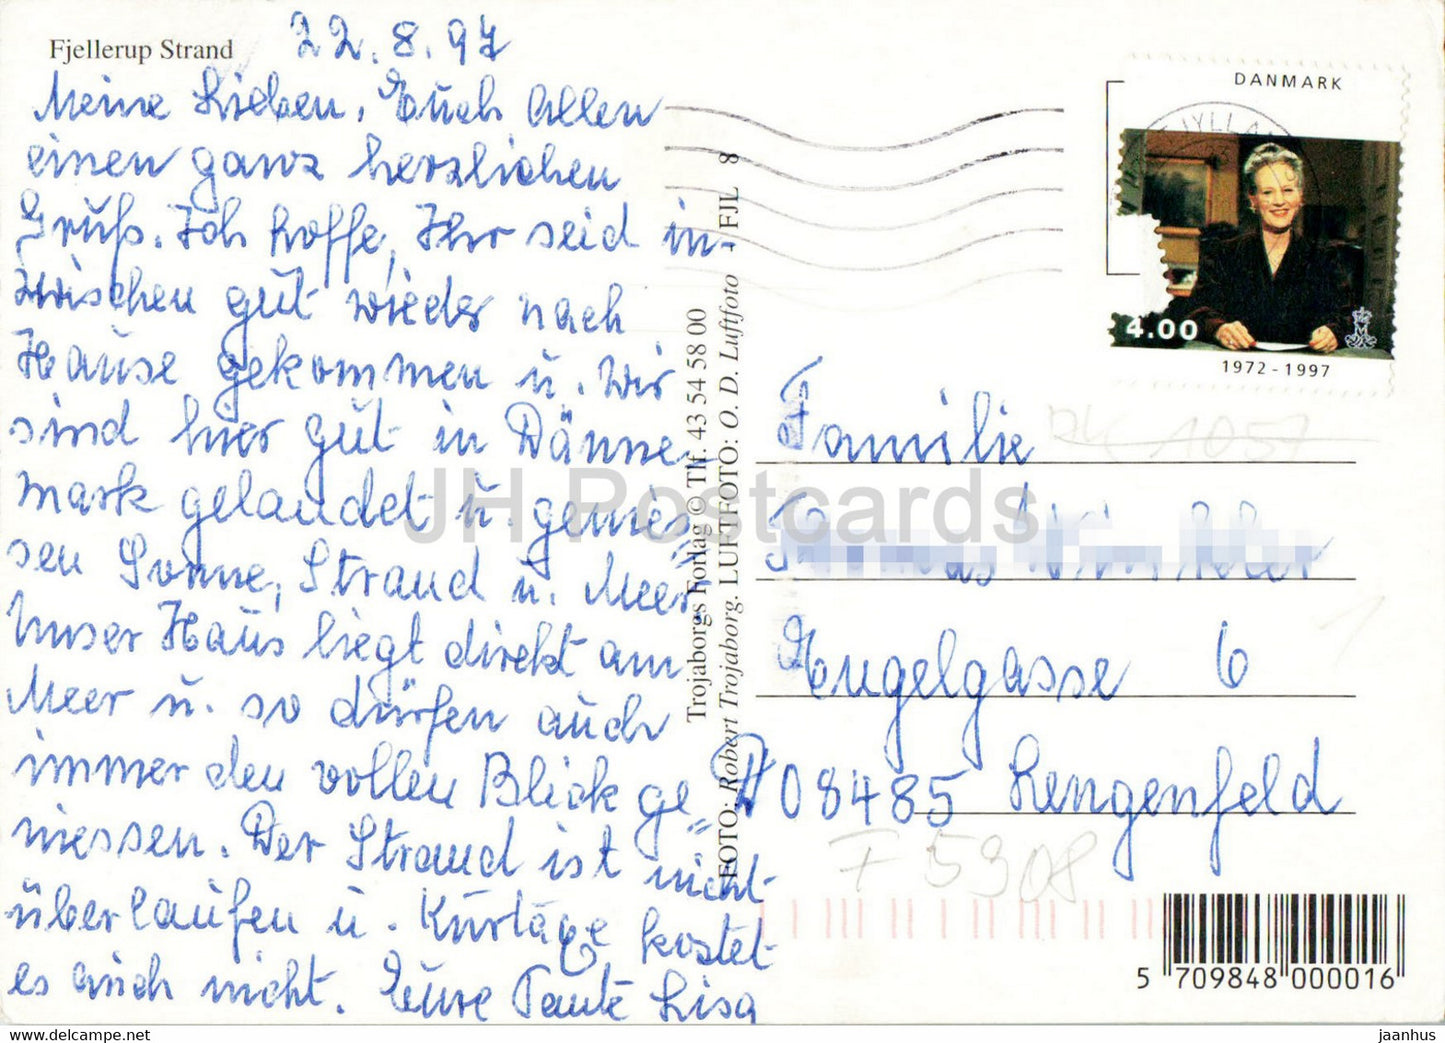 Fjellerup Strand - multiview - 1997 - Danemark - d'occasion